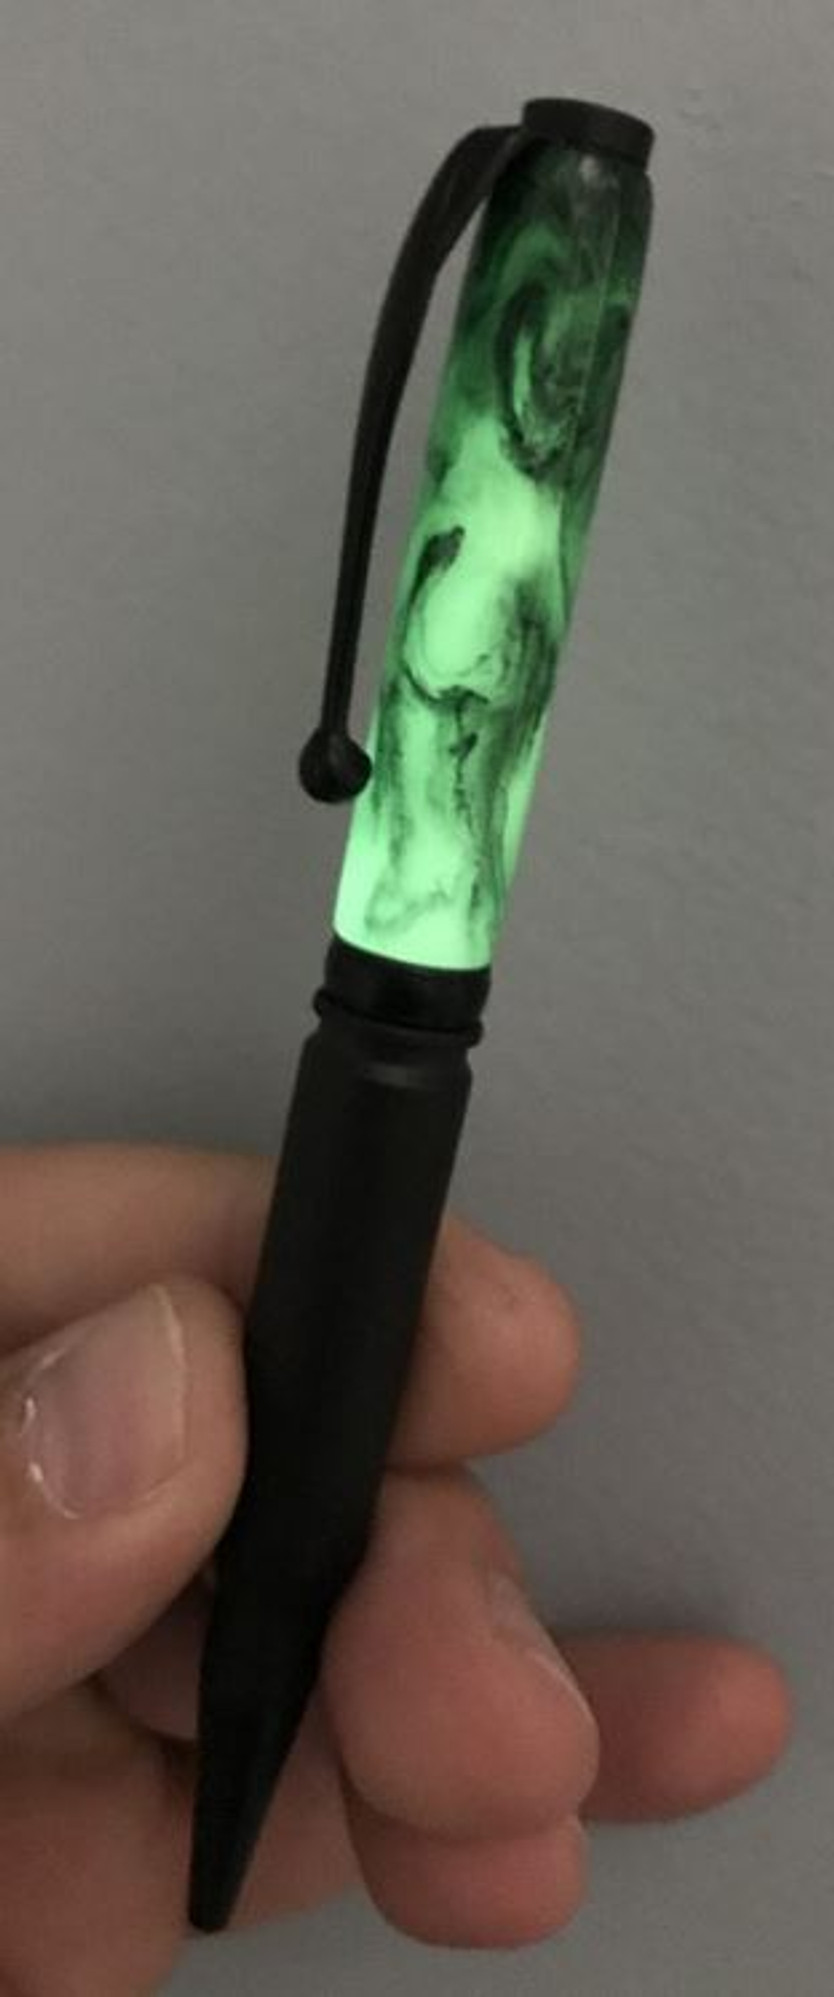 308 Zombie Pen Black with Green Glow